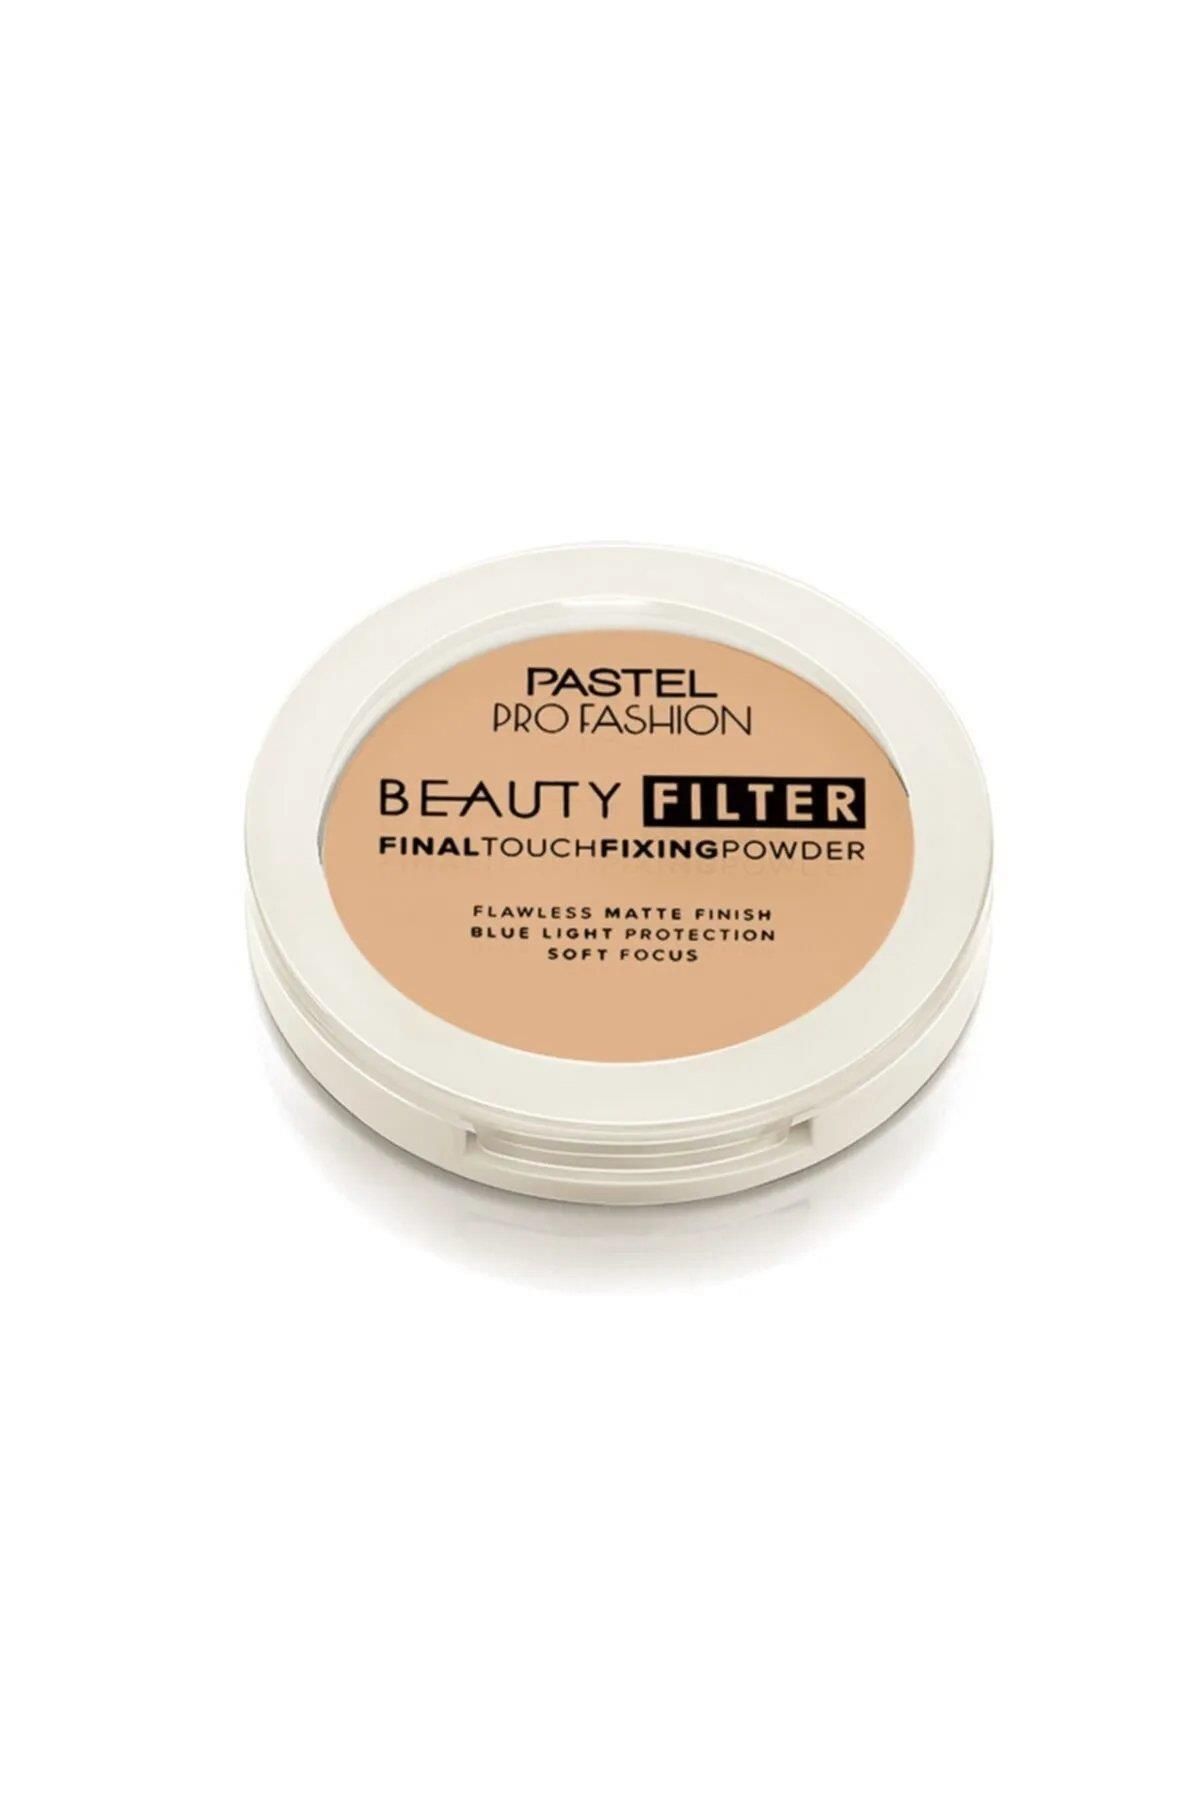 Pastel Sabitleyici Pudra Profashion Beauty Filter Final Touch Fixing Powder 01